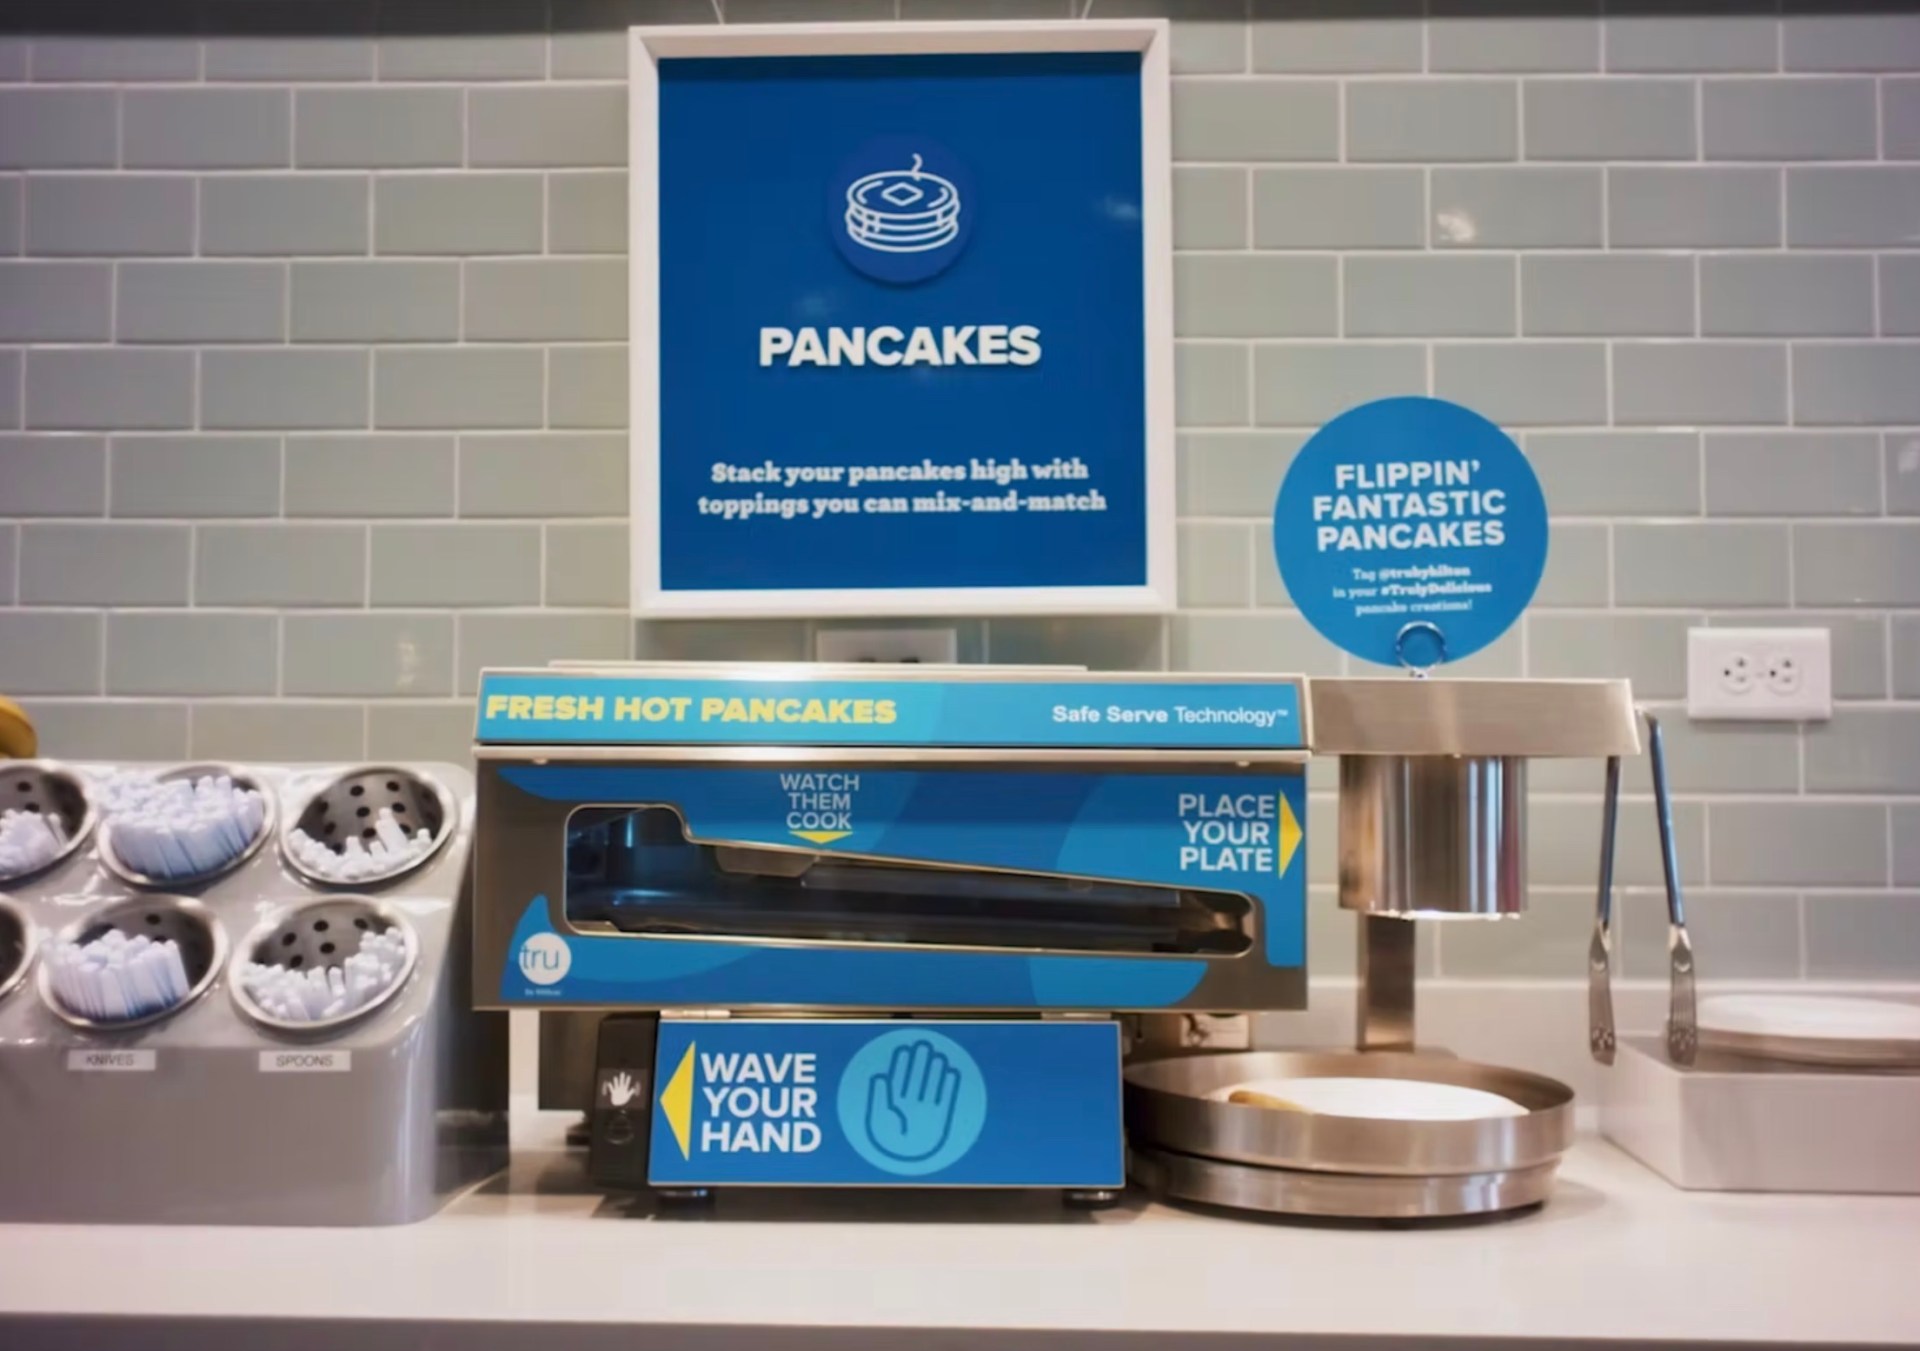 Tru by Hilton's New Automatic Pancake Maker – It's Magic!